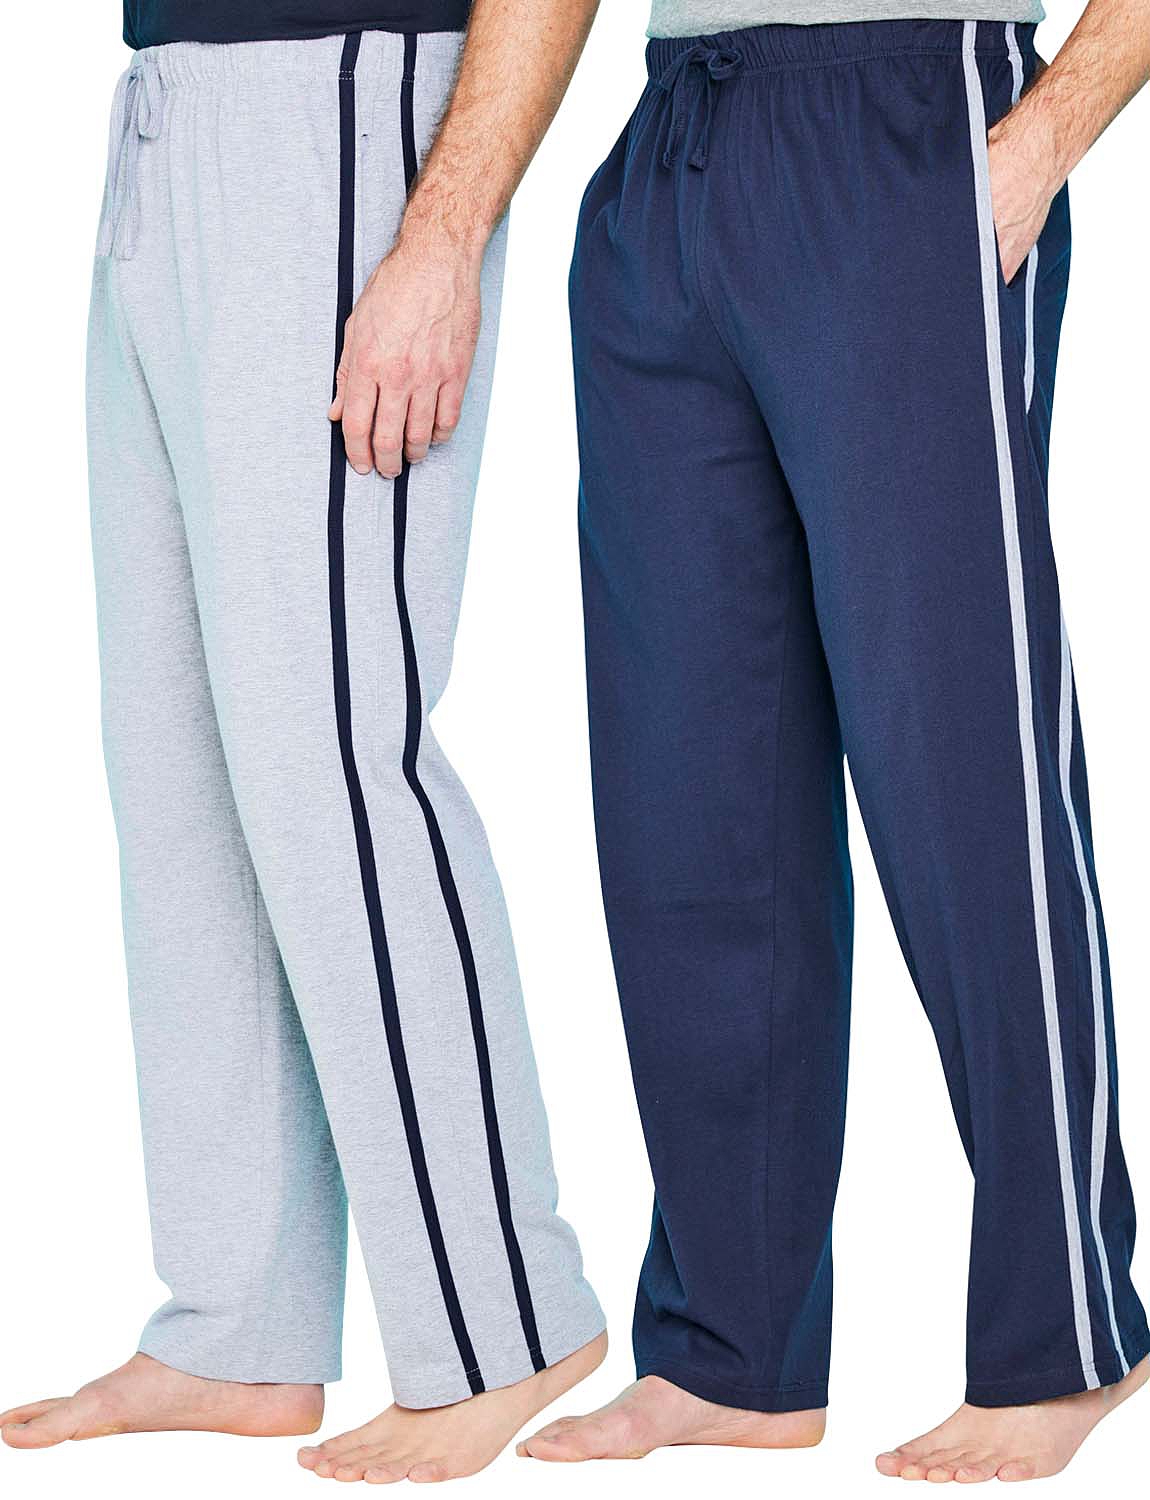 Silk Lounge Pants Pijama | Mens Sexy Lounge Pants | Men Sexy Pajamas Pants  - Mens Pajama - Aliexpress